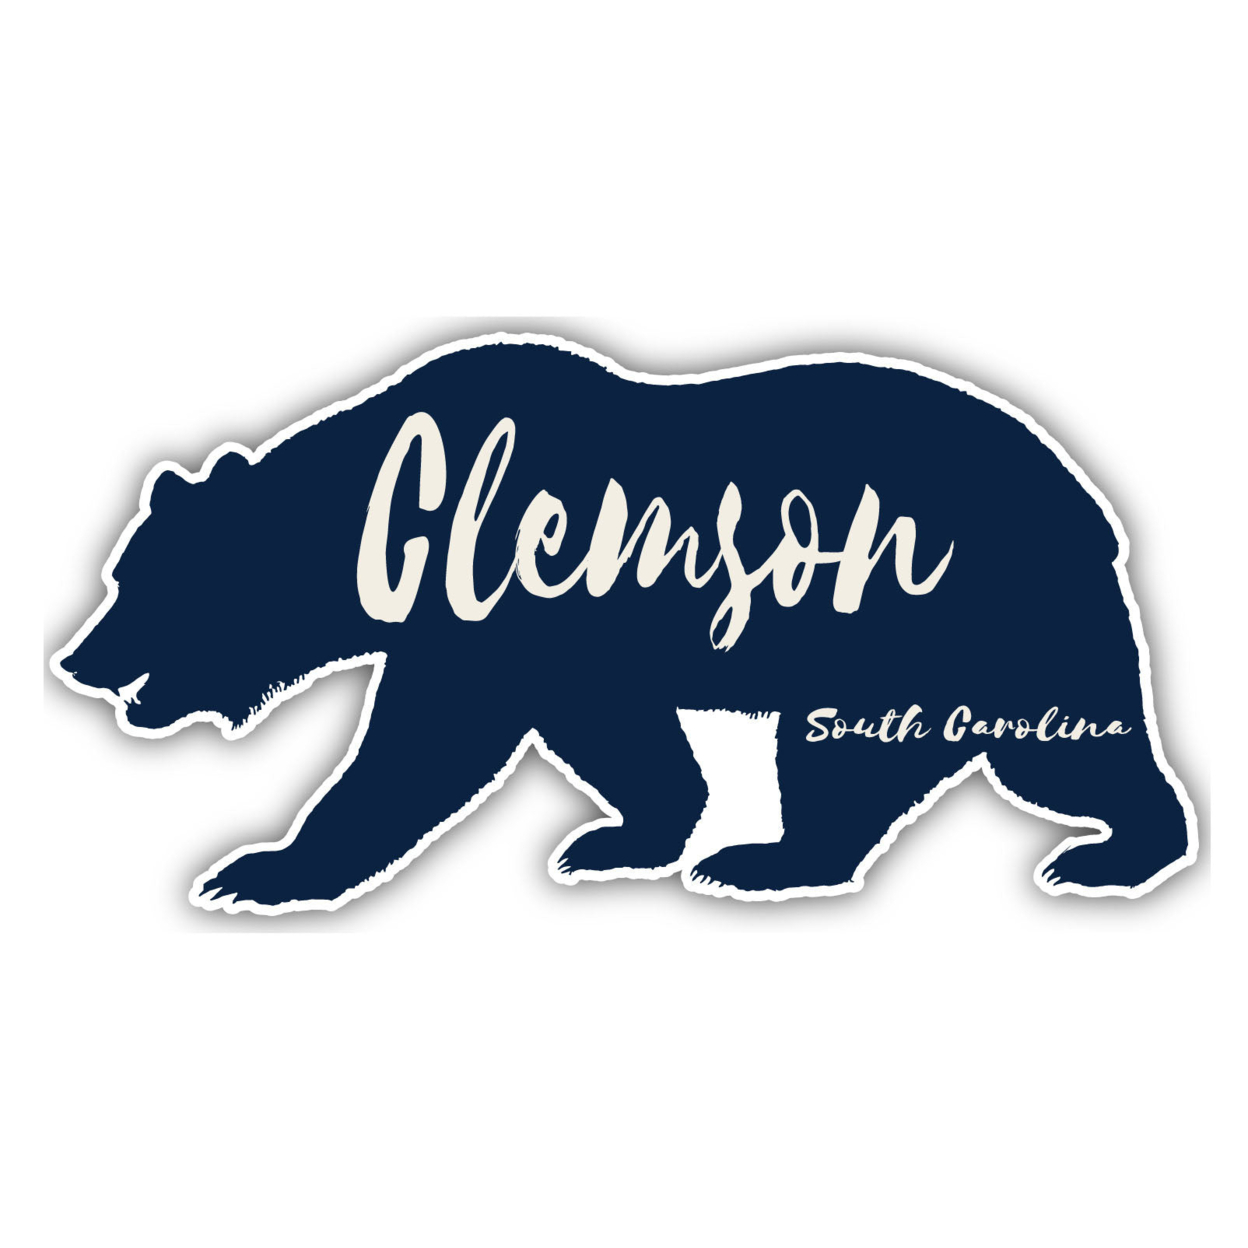 Clemson South Carolina Souvenir Decorative Stickers (Choose Theme And Size) - Single Unit, 10-Inch, Tent